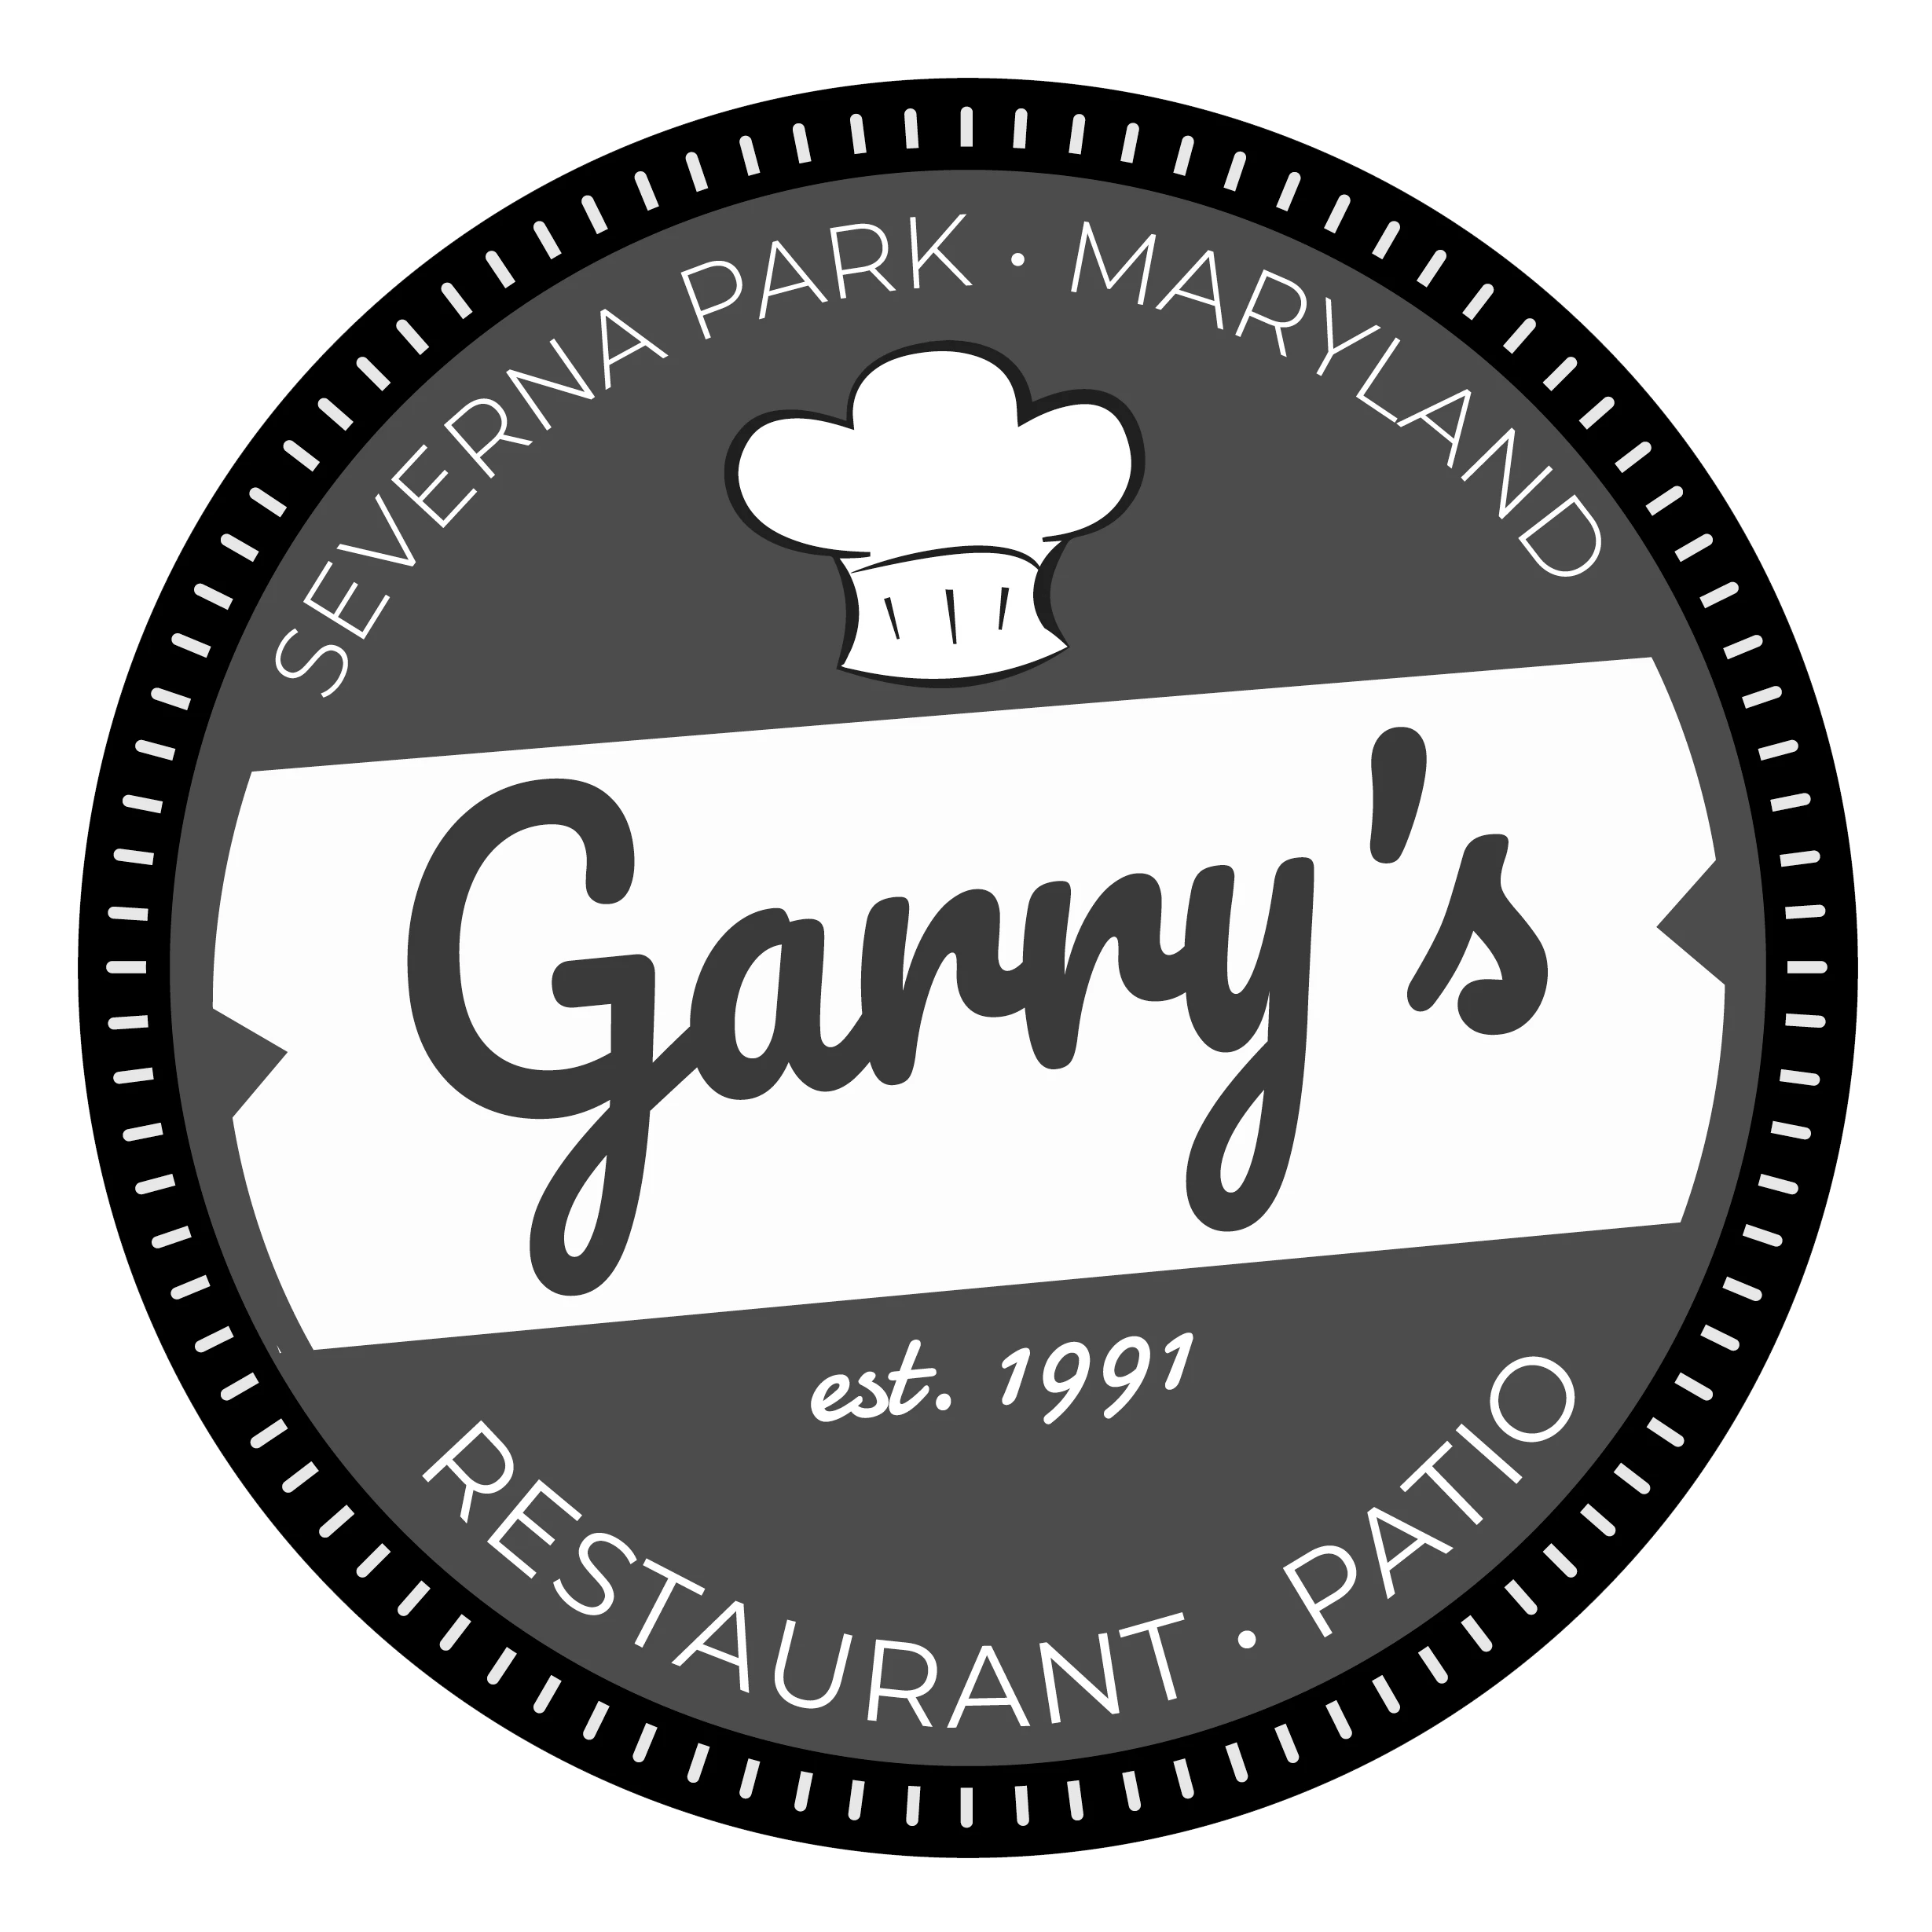 Garry's Grill